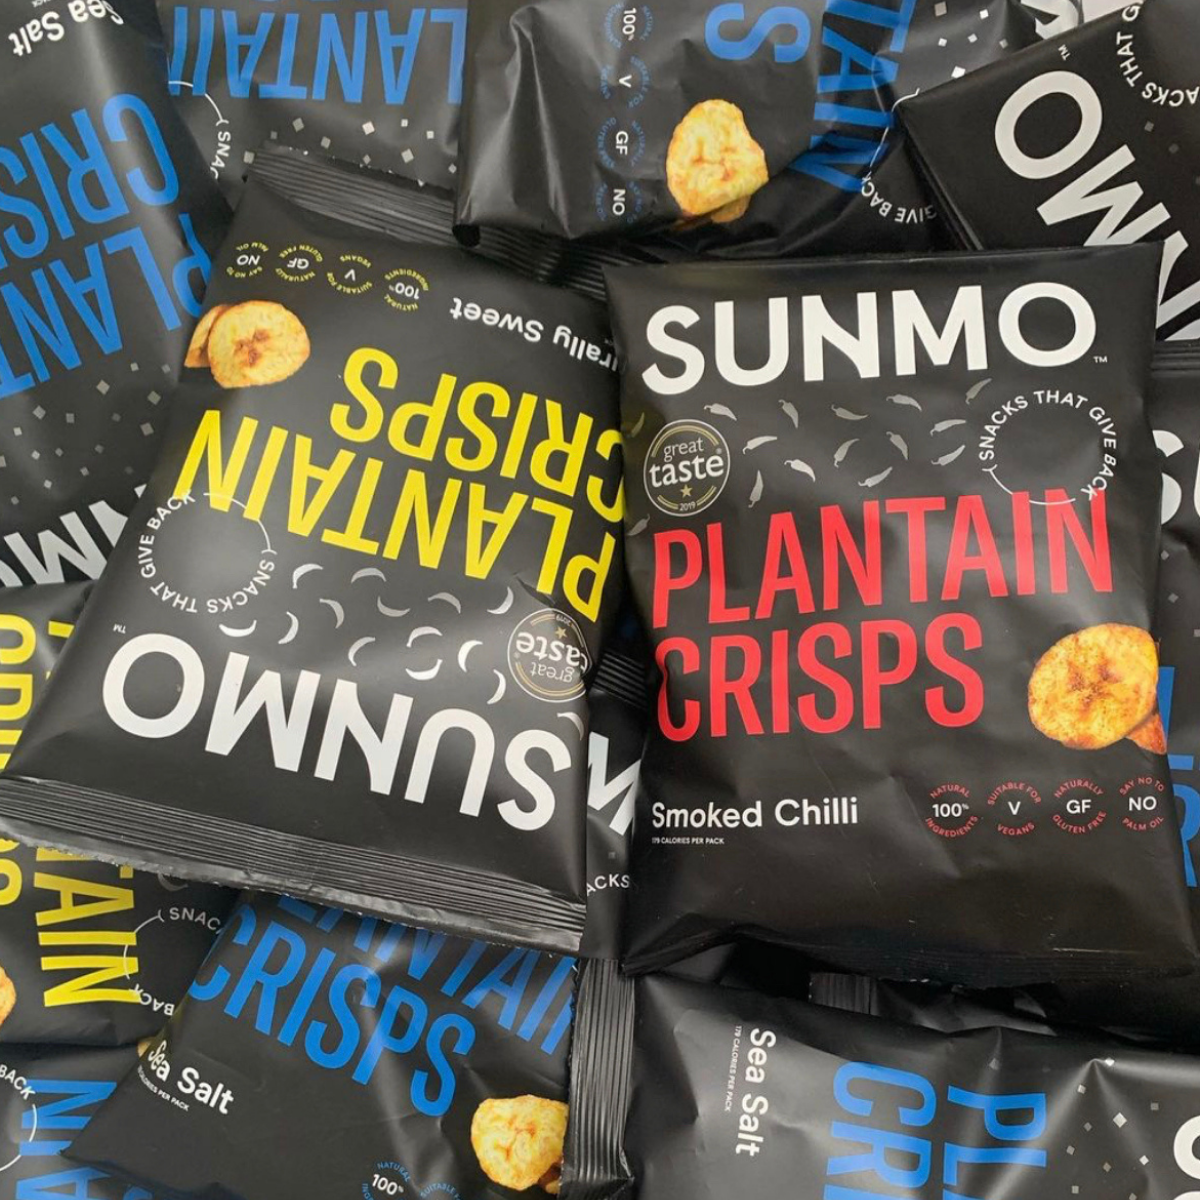 Sunmo Plantain Crisps - 12 packets